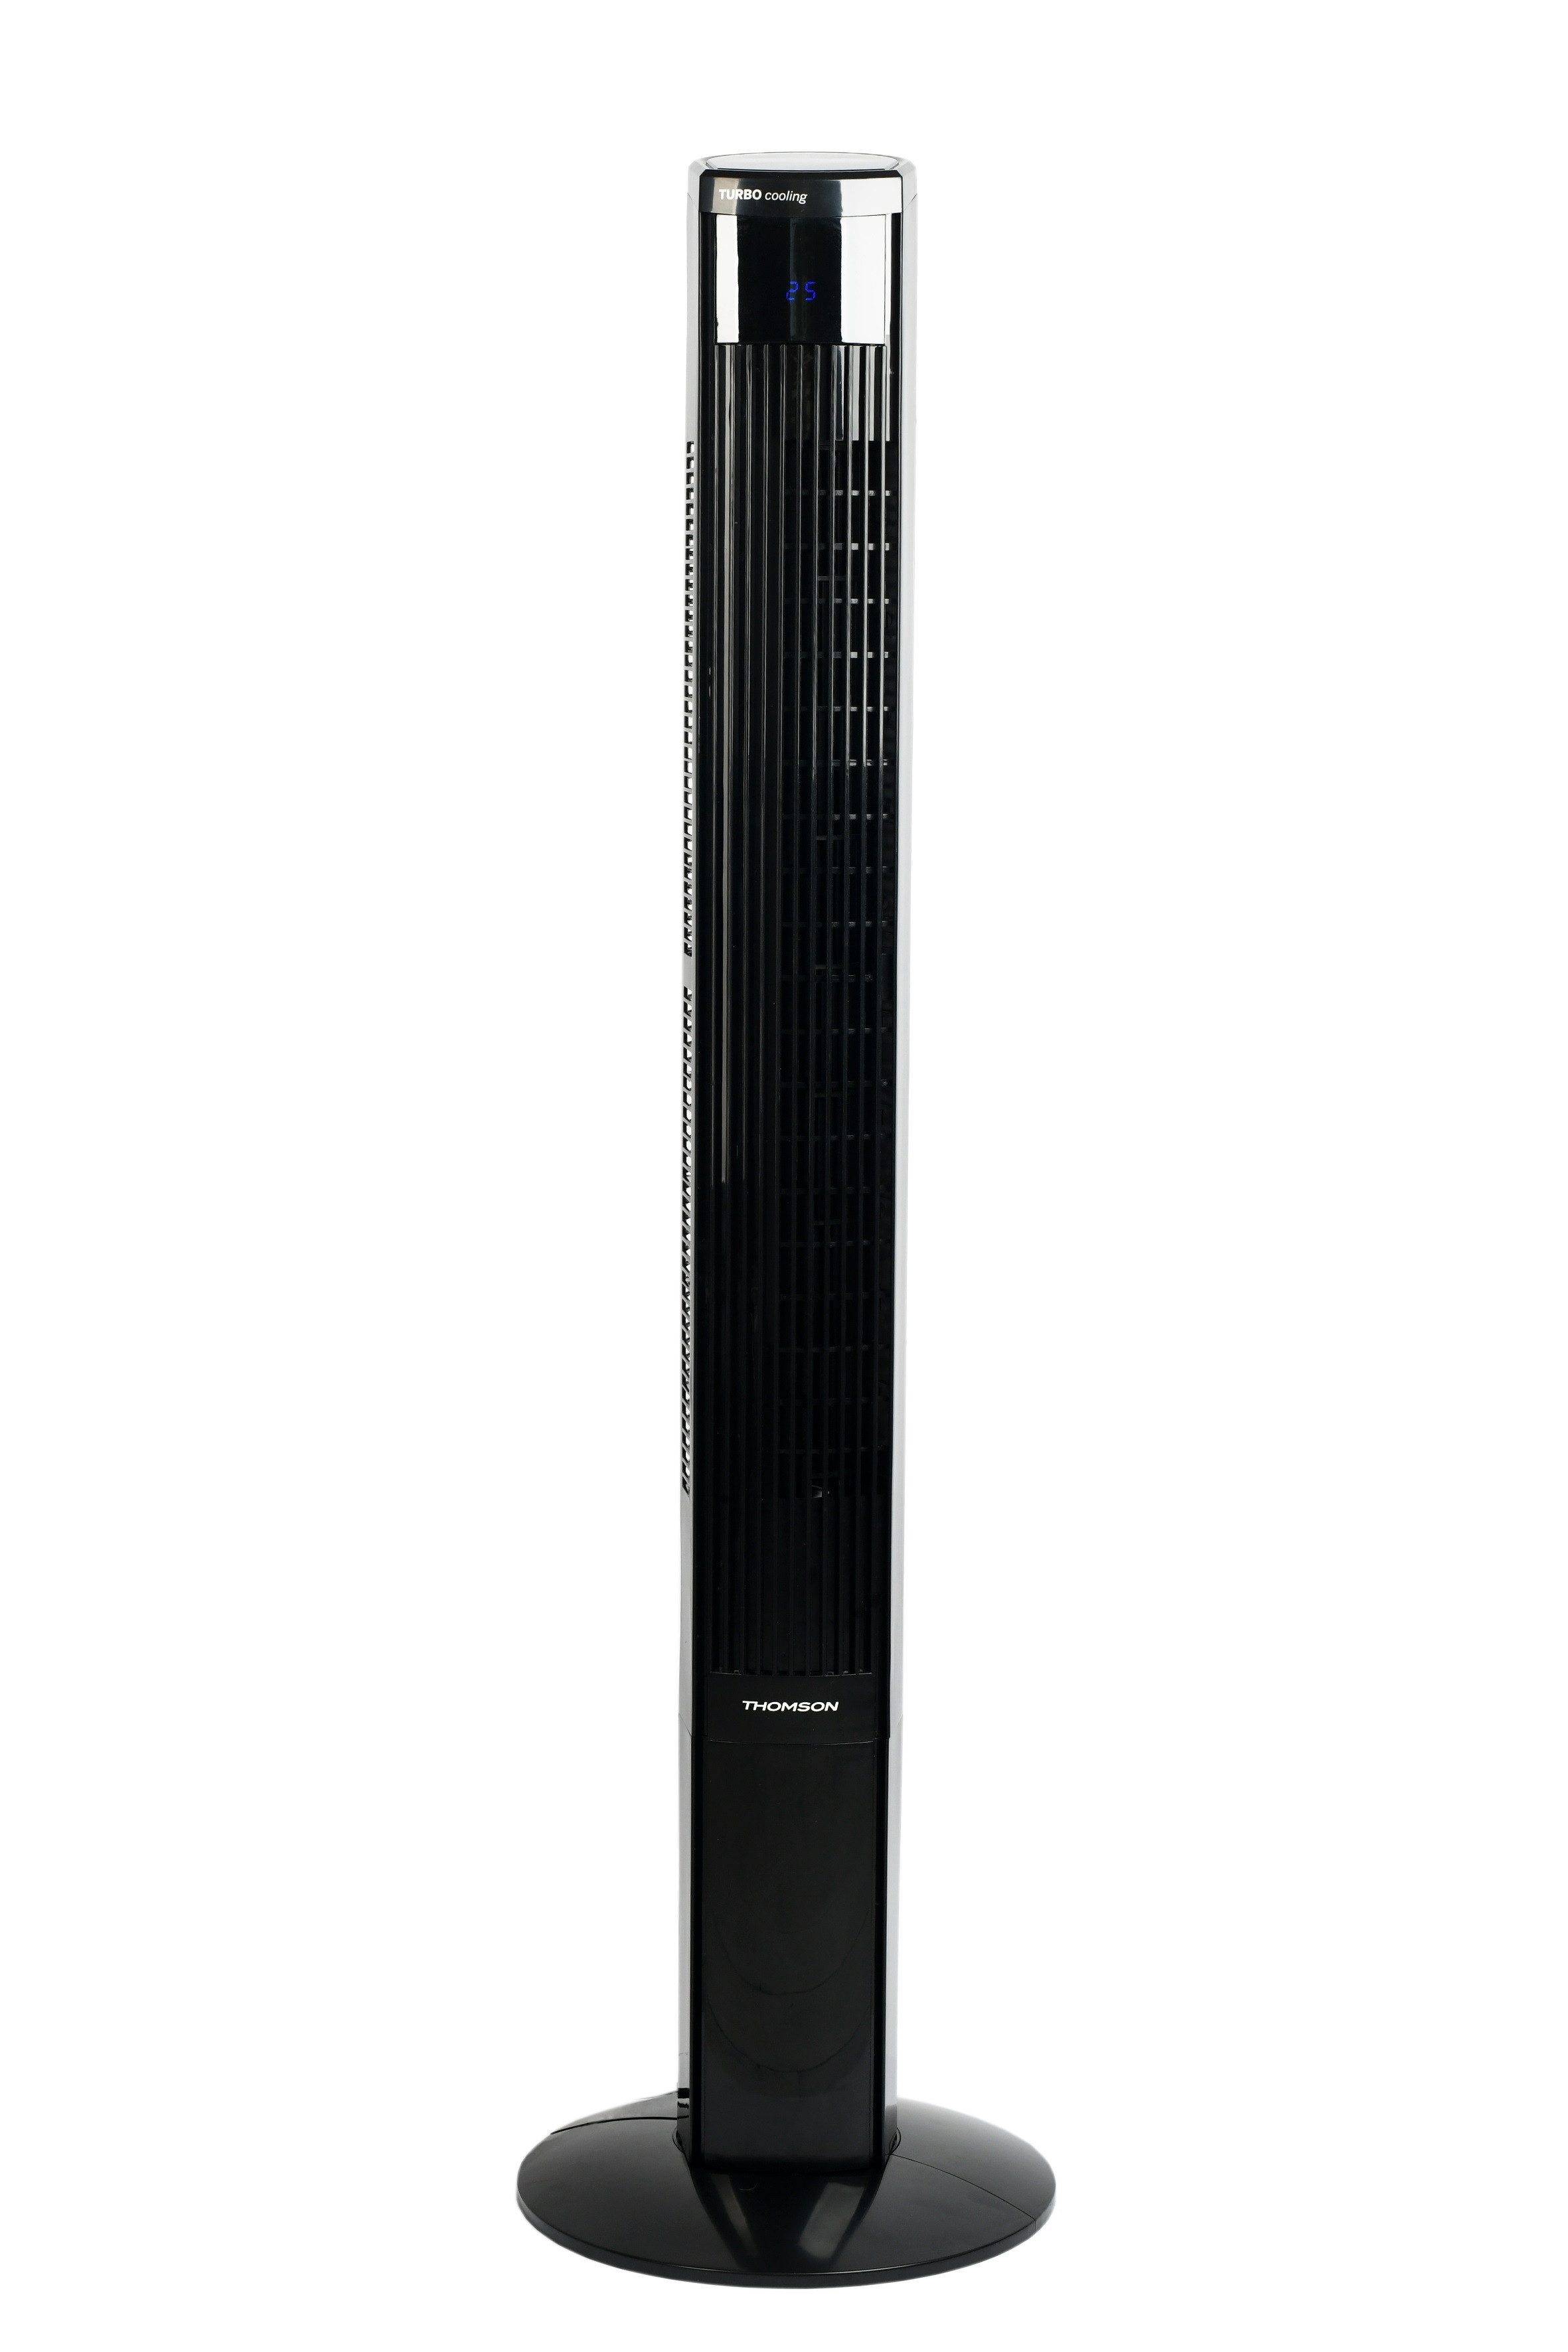 Thomson Turmventilator THVEL500T, 3 Stufen, 24h Timer, 116 cm hoch